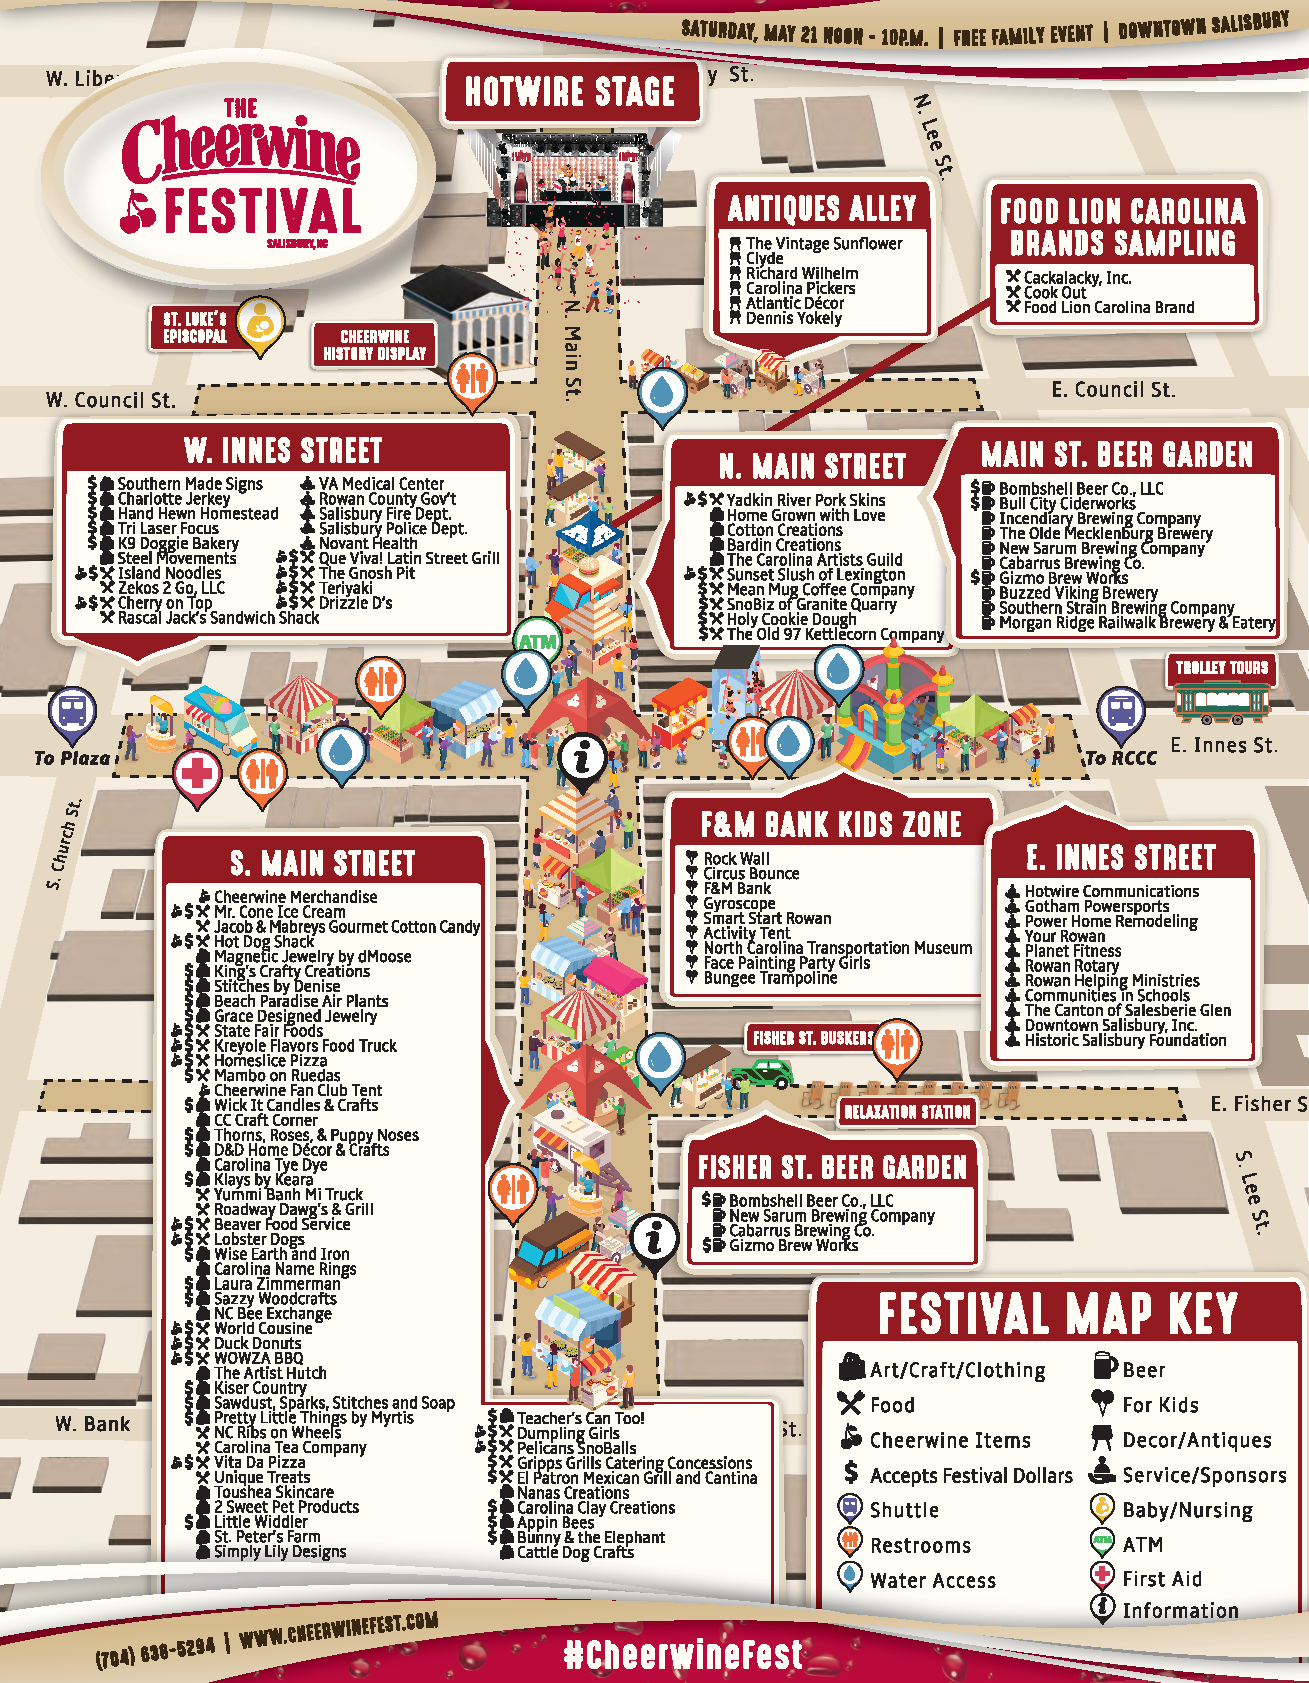 Thumbnail of Festival Map